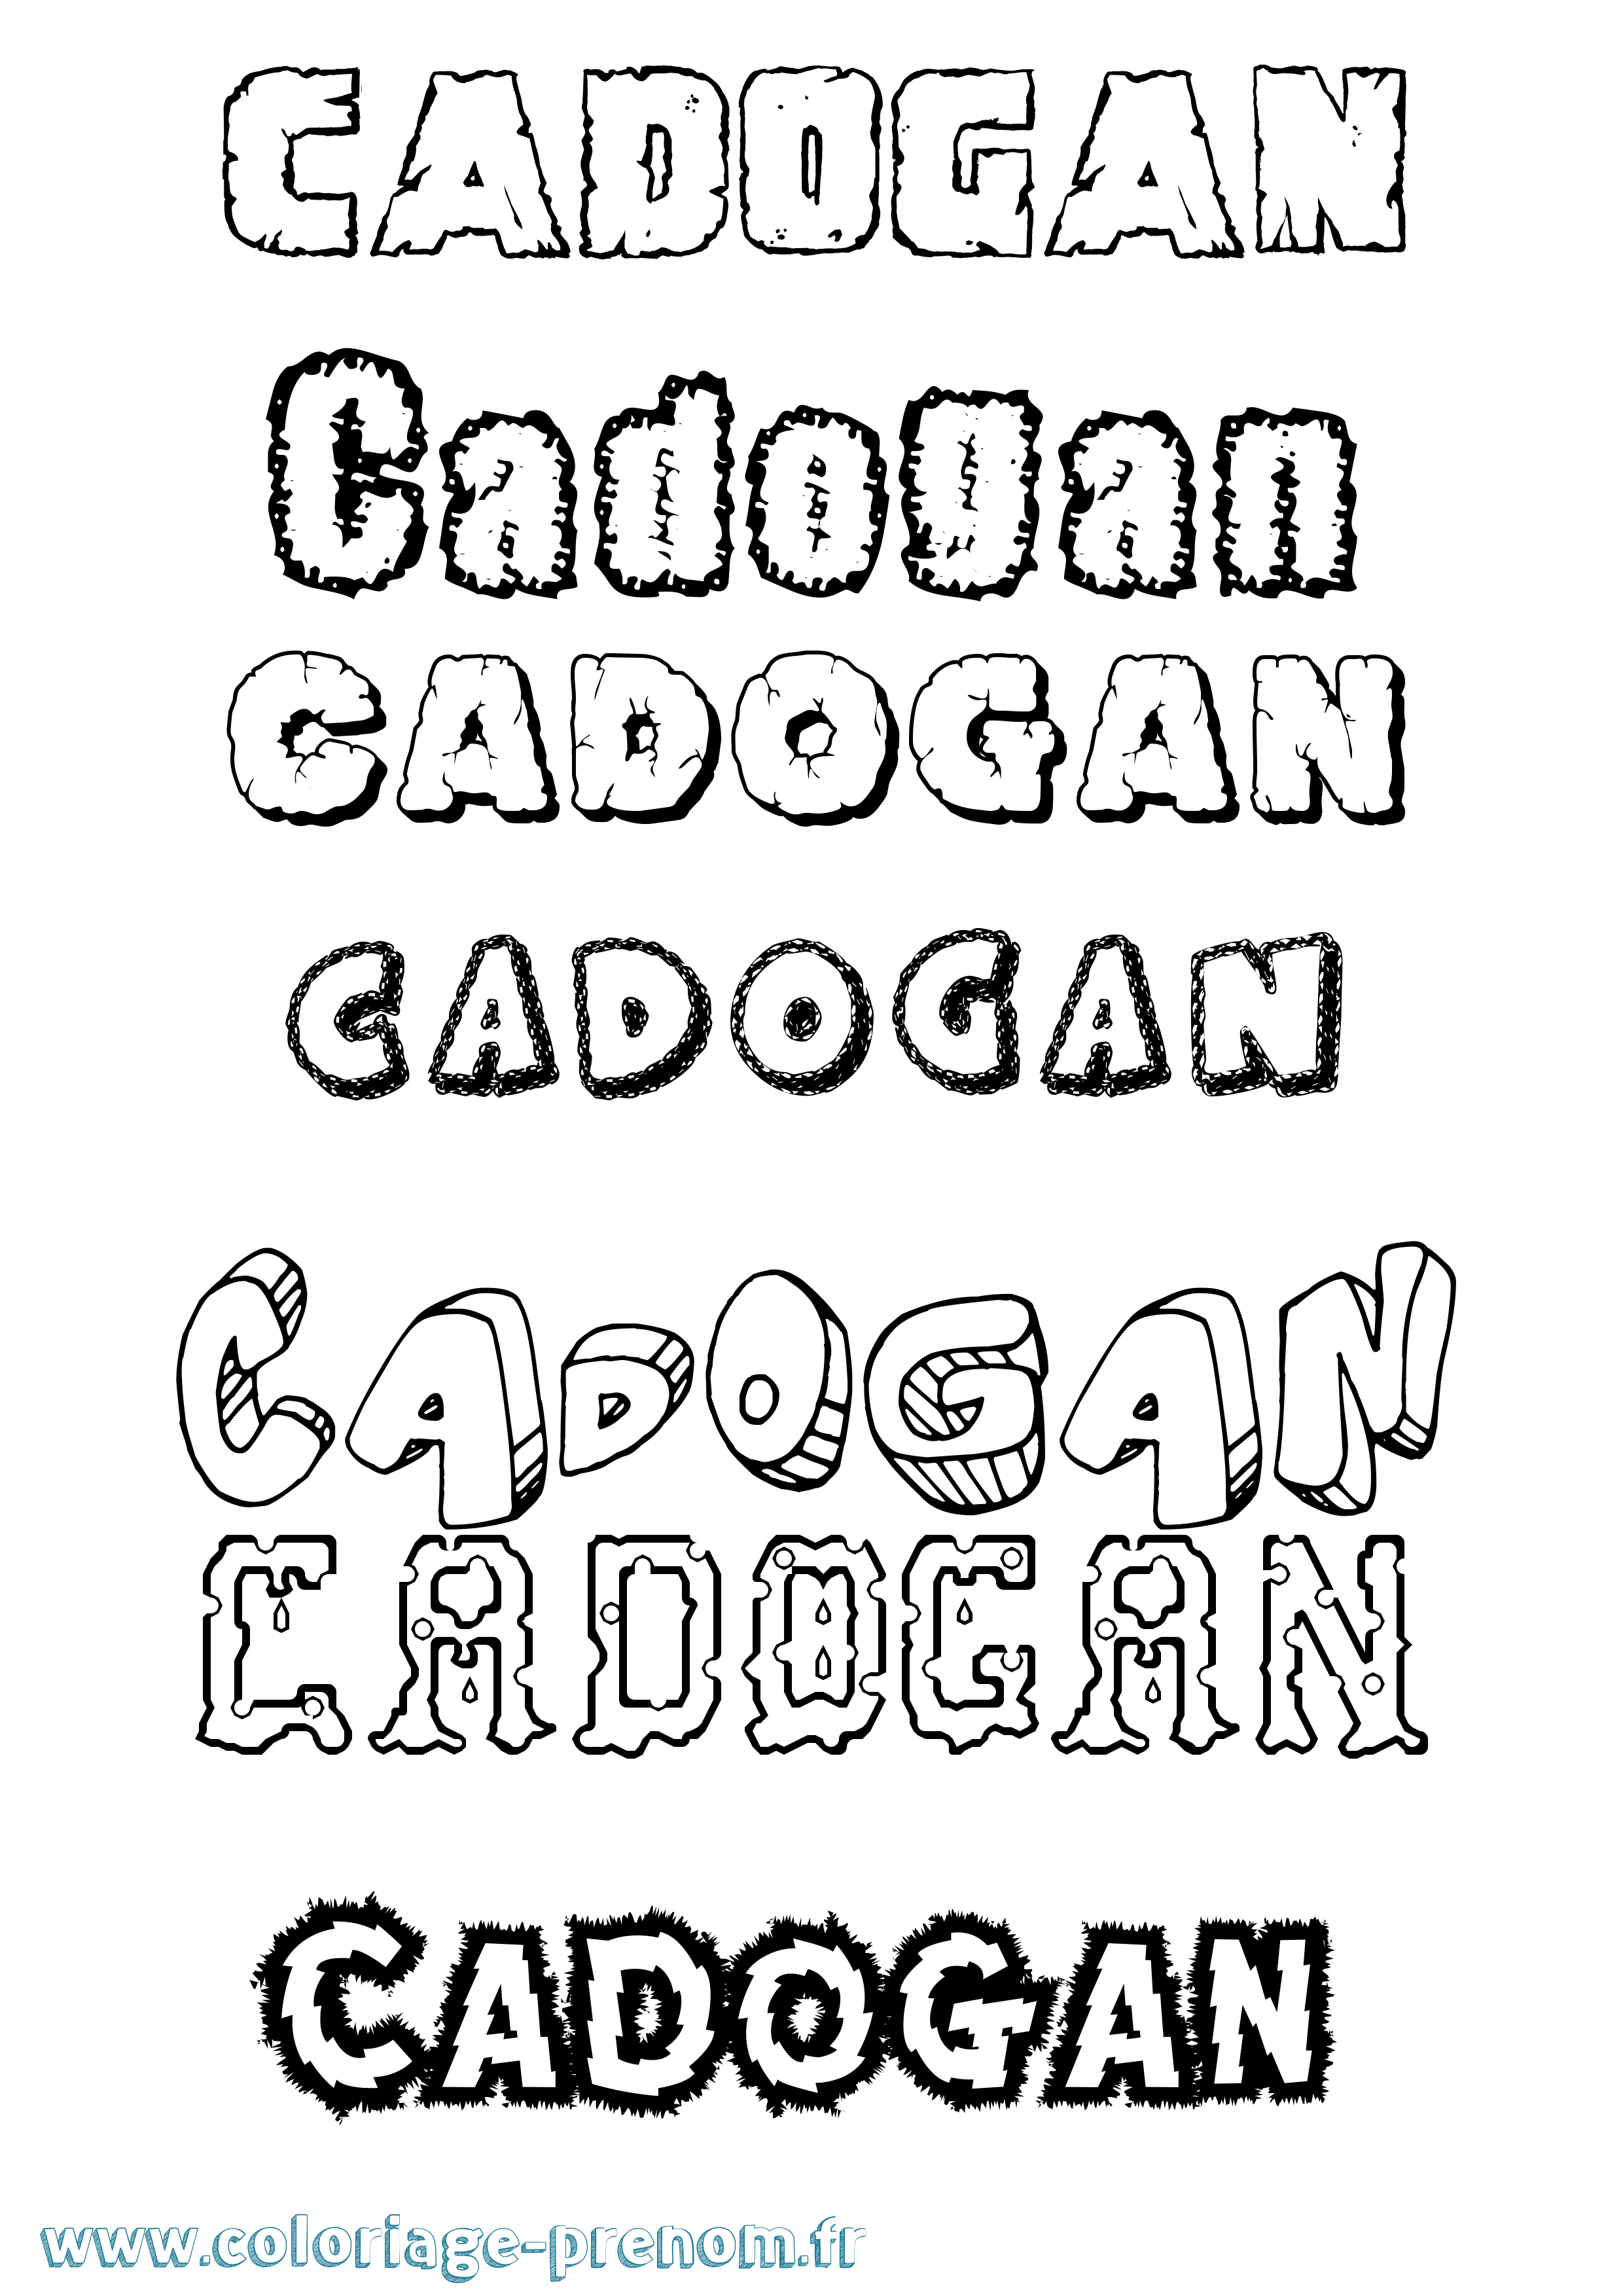 Coloriage prénom Cadogan Destructuré